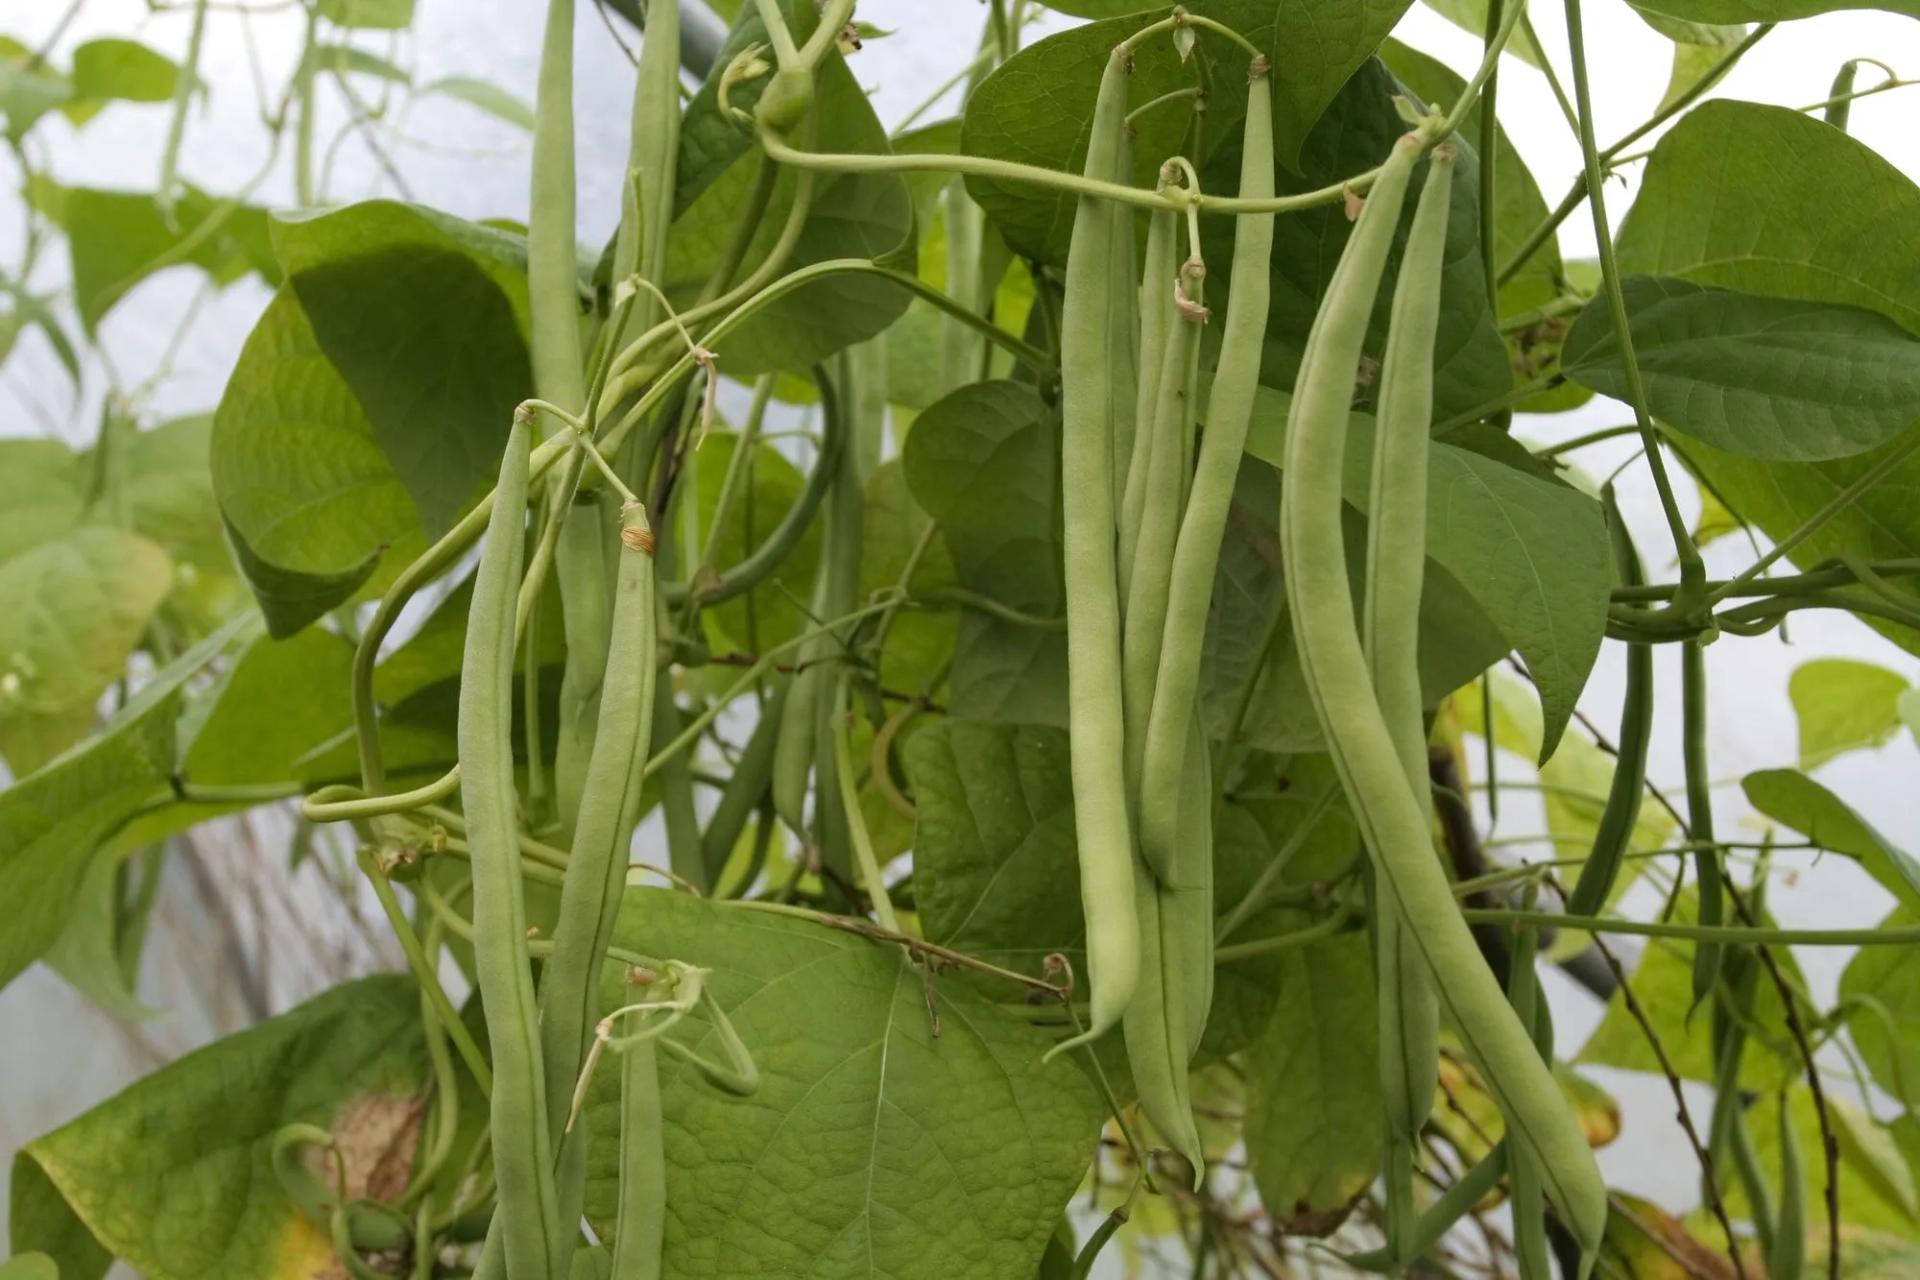 Green Bean Stalks Growing on a Vine